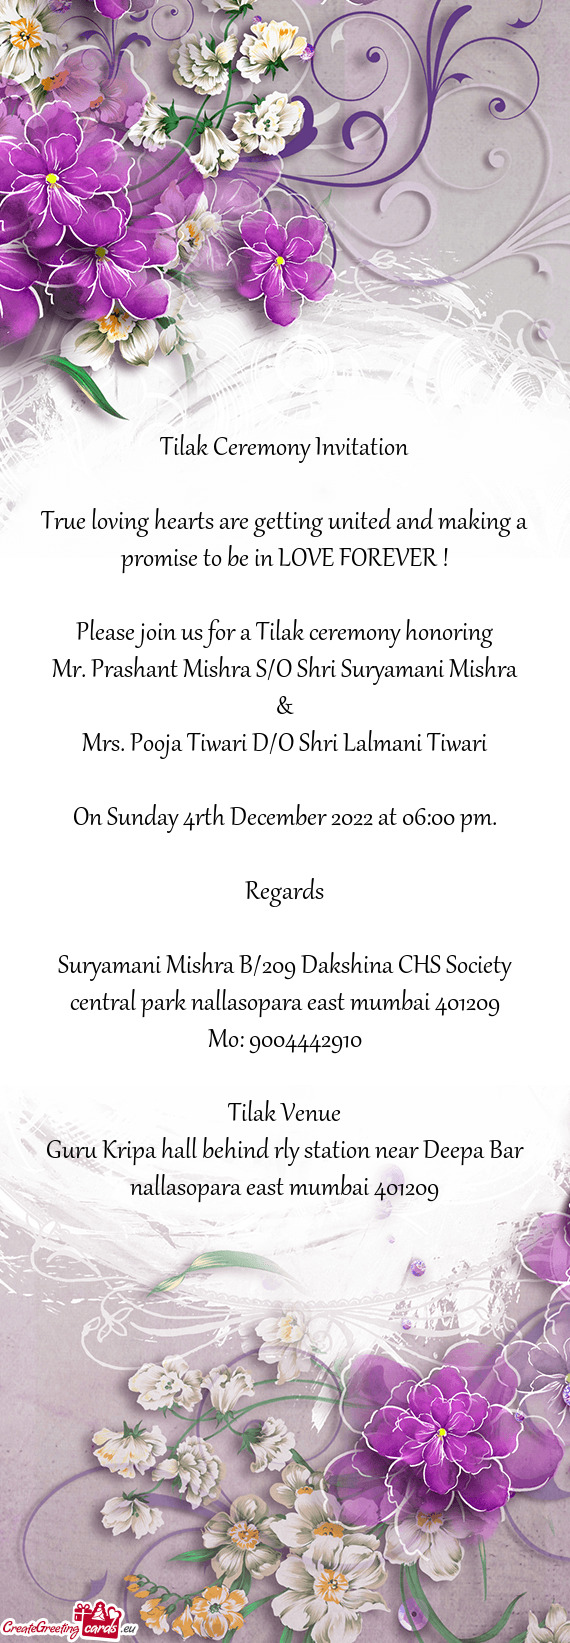 Mrs. Pooja Tiwari D/O Shri Lalmani Tiwari